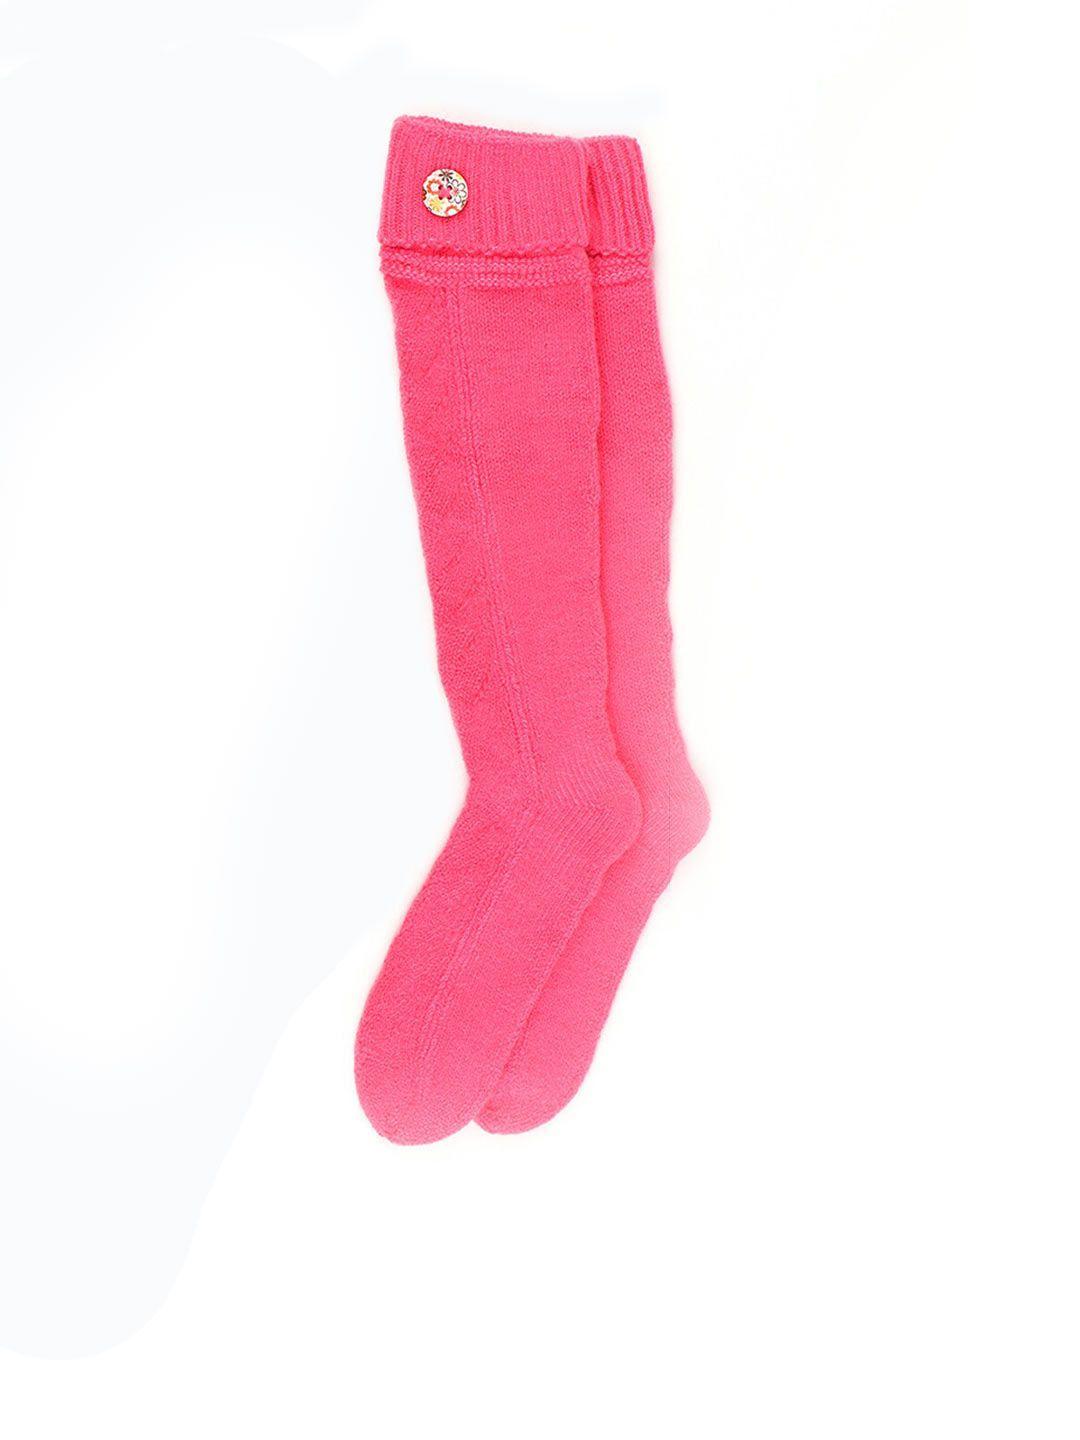 bharatasya girls pink solid knee length socks